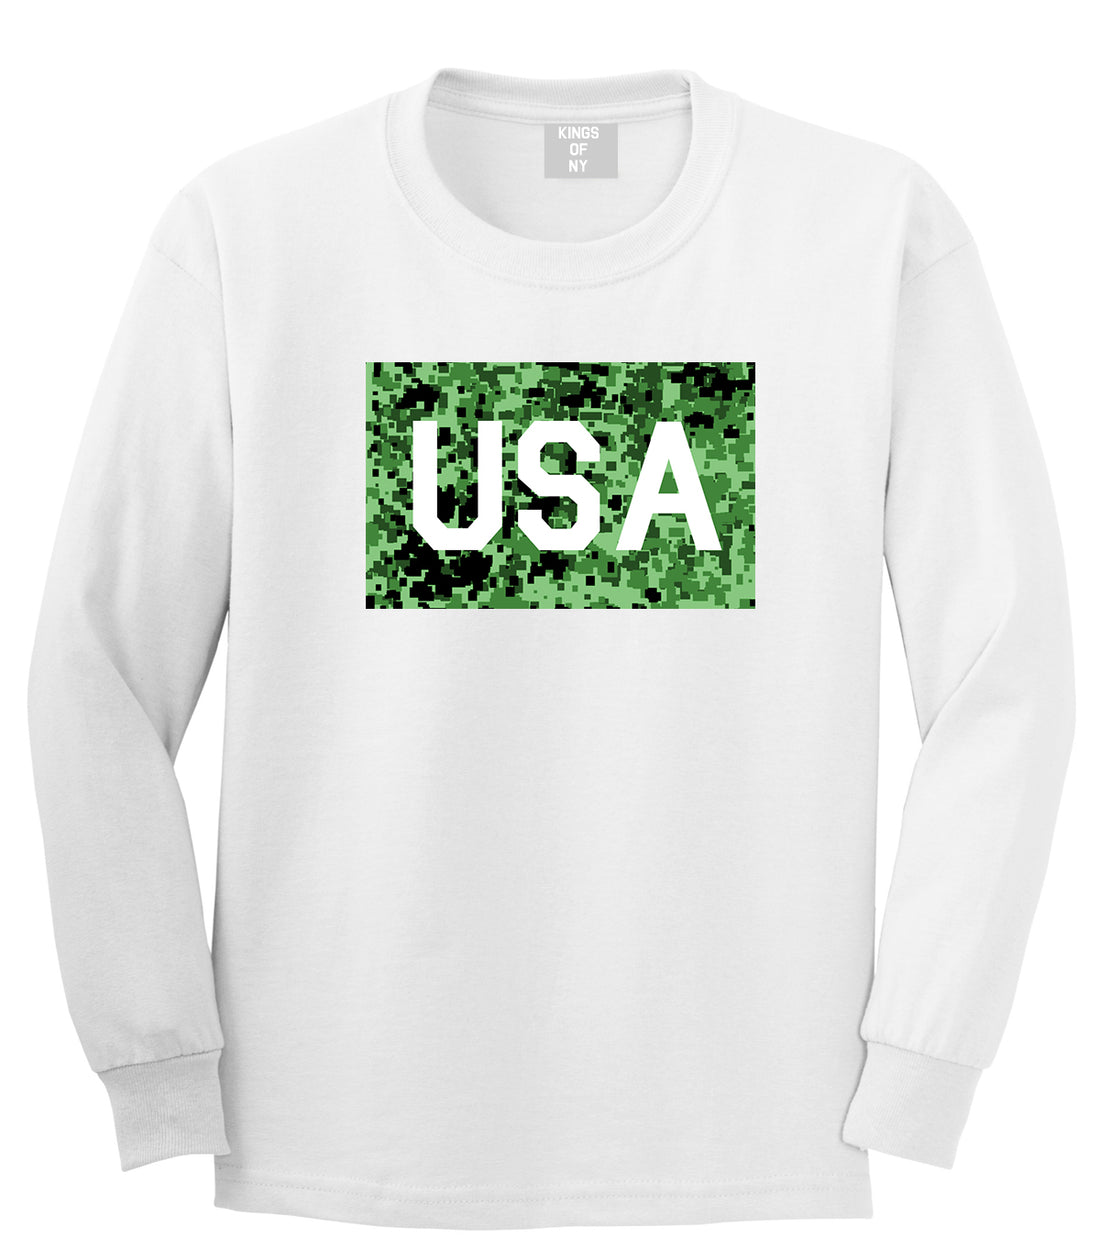 USA Digital Camo Army Mens White Long Sleeve T-Shirt by Kings Of NY